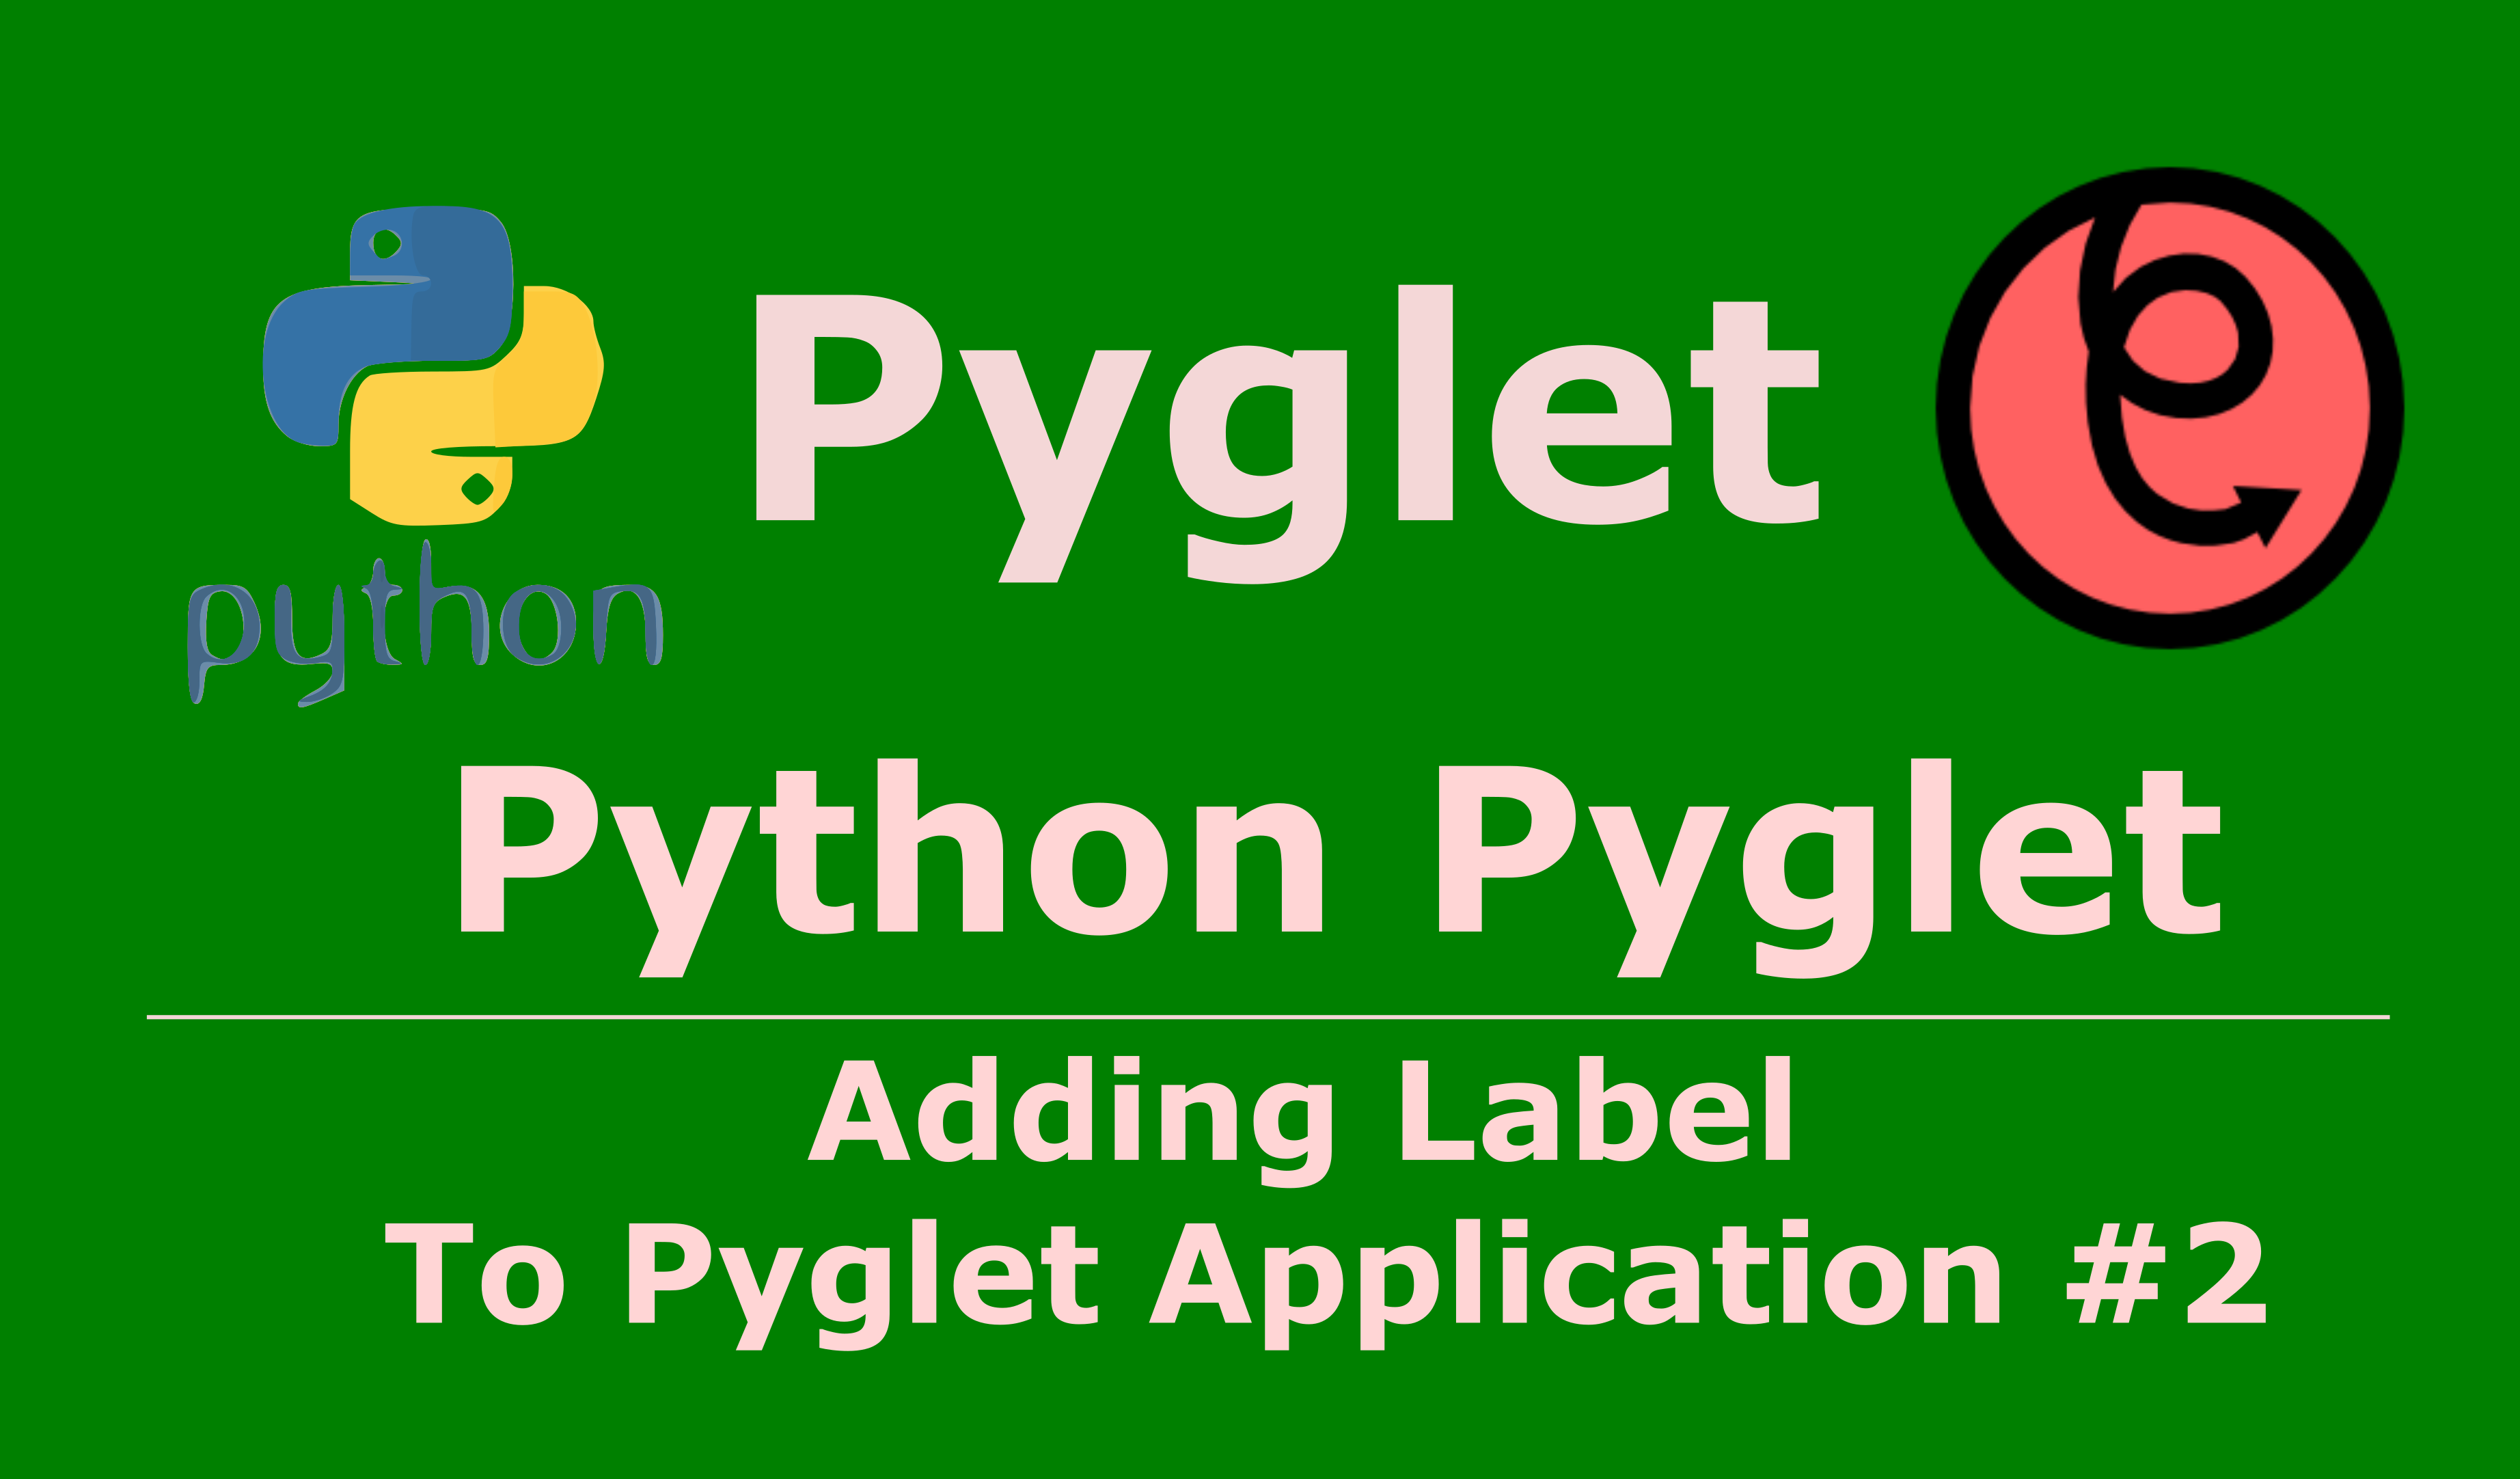 Pyglet Python Adding Label To Application